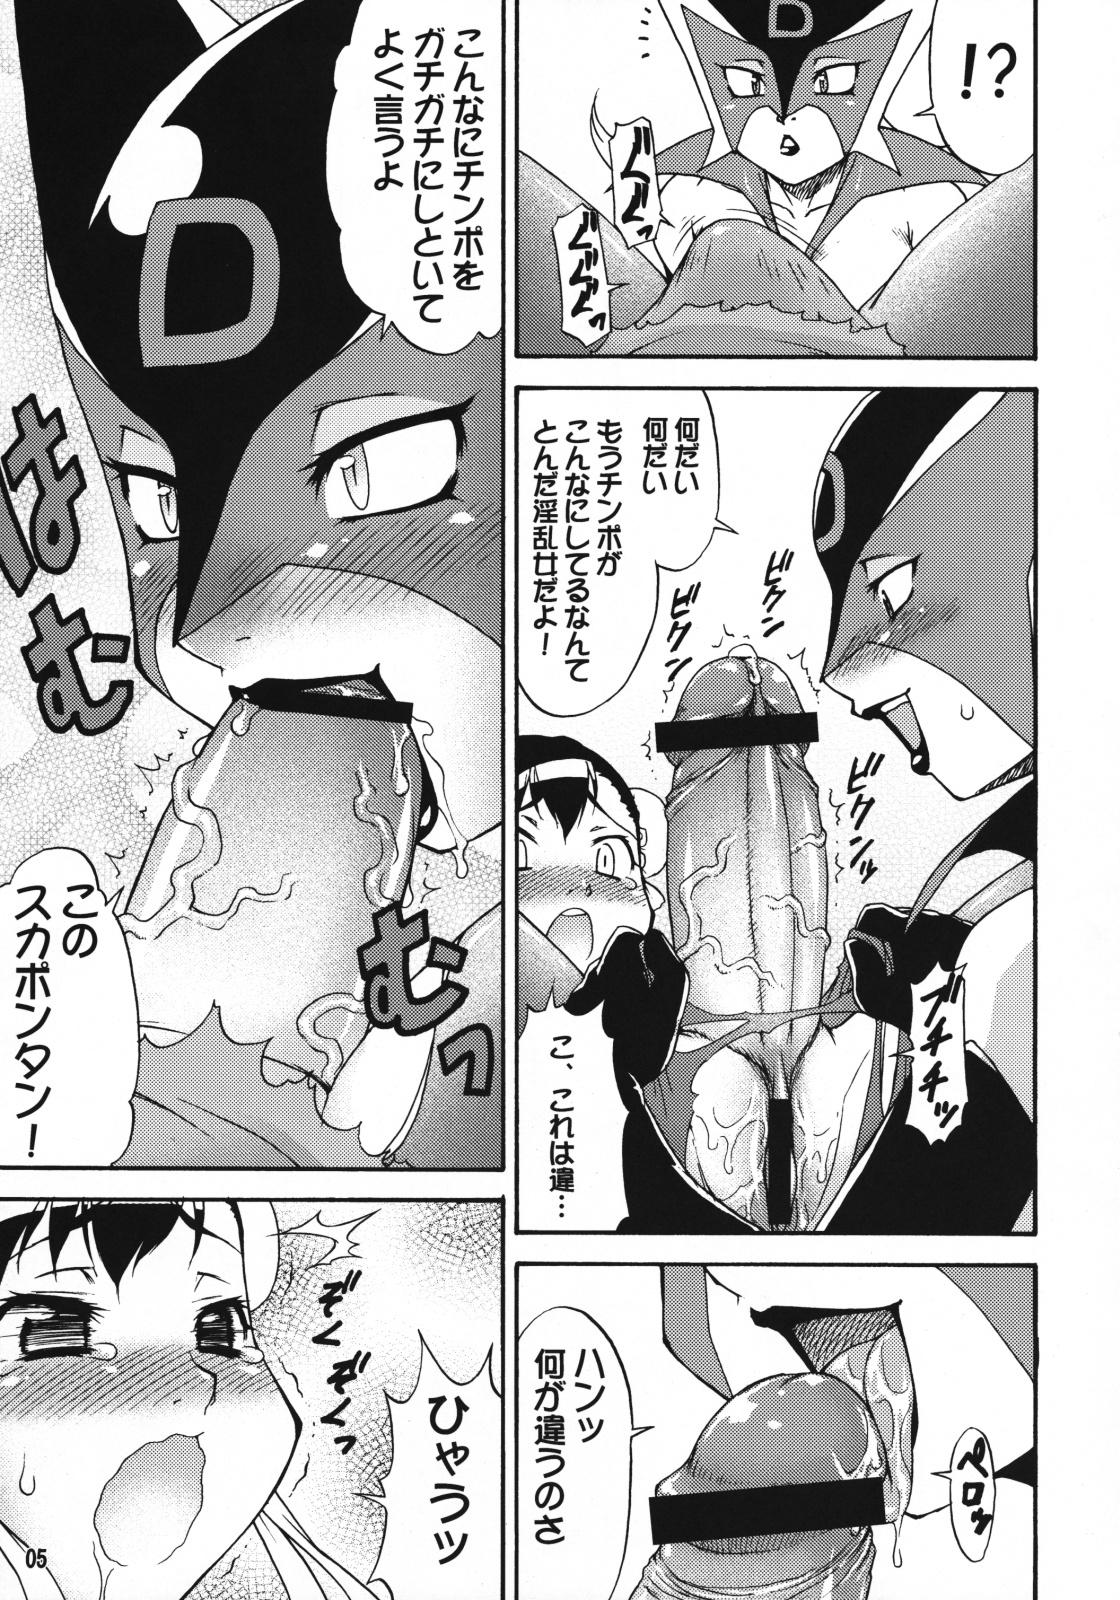 Lingerie Mikawa Ondo 6 - Street fighter Darkstalkers Princess crown Cyberbots Yatterman Tittyfuck - Page 4